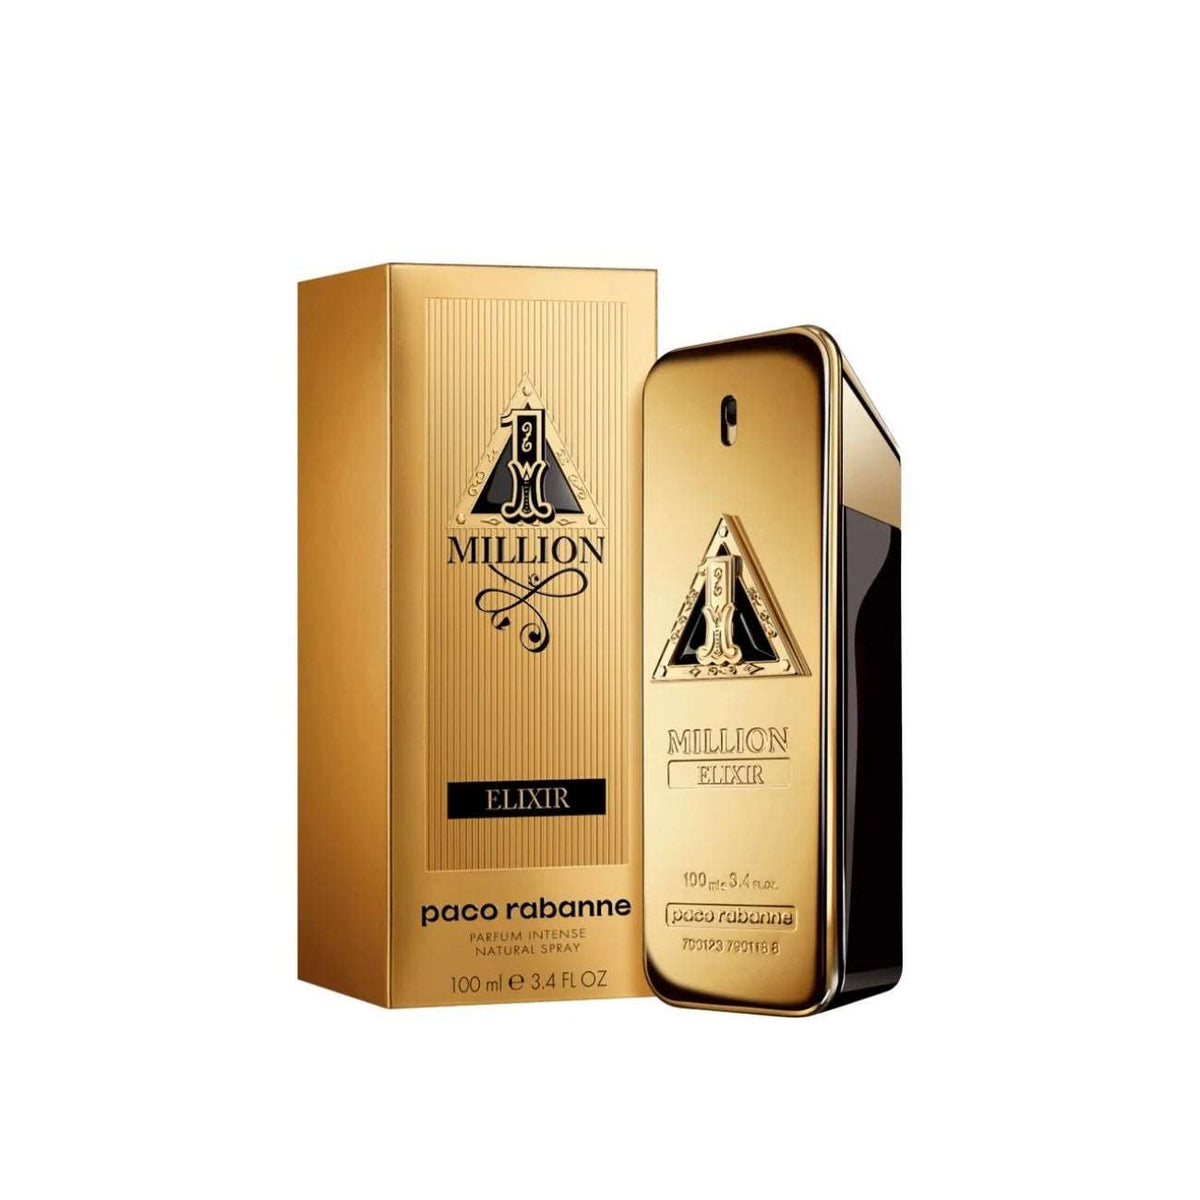 1 Million Elixir by Paco Rabanne for Men - Parfum Intense - 100ml